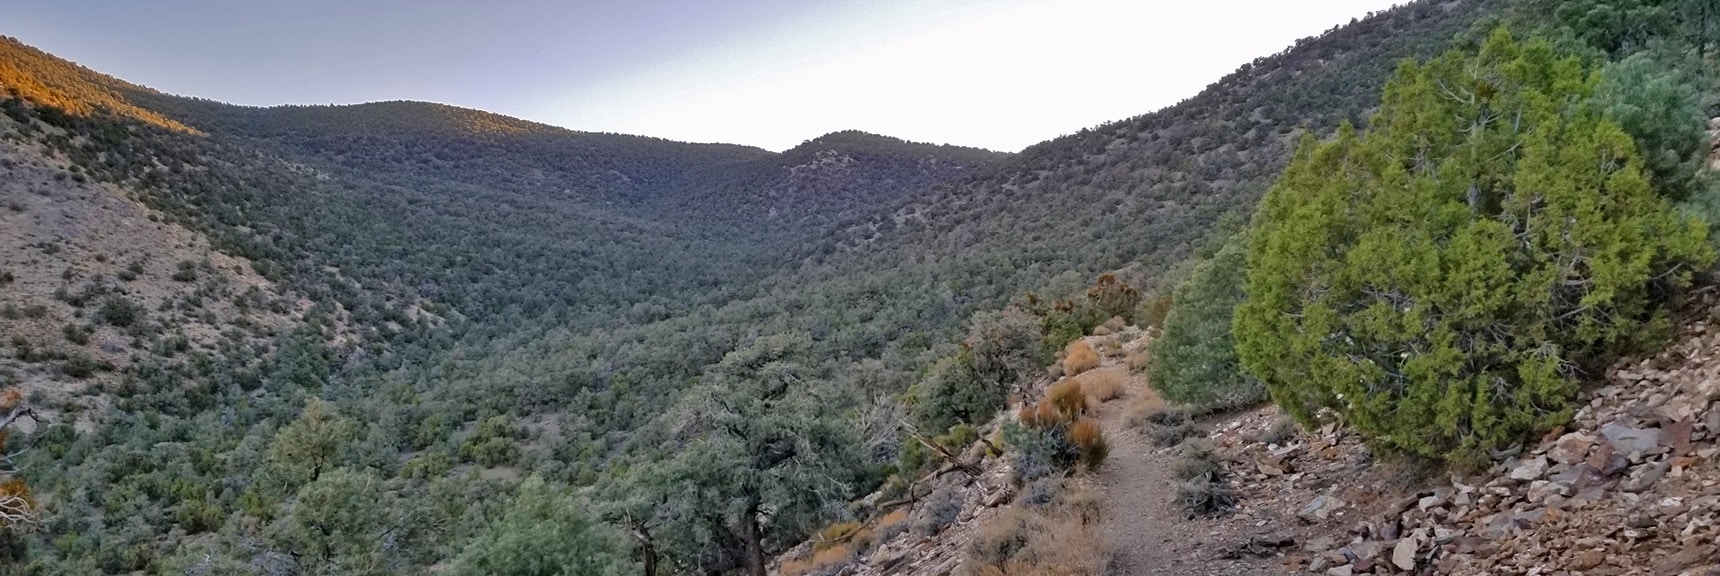 View Up Canyon Trail Approach Toward Panamint Range Summit Ridge | Wildrose Peak | Panamint Mountain Range | Death Valley National Park, California